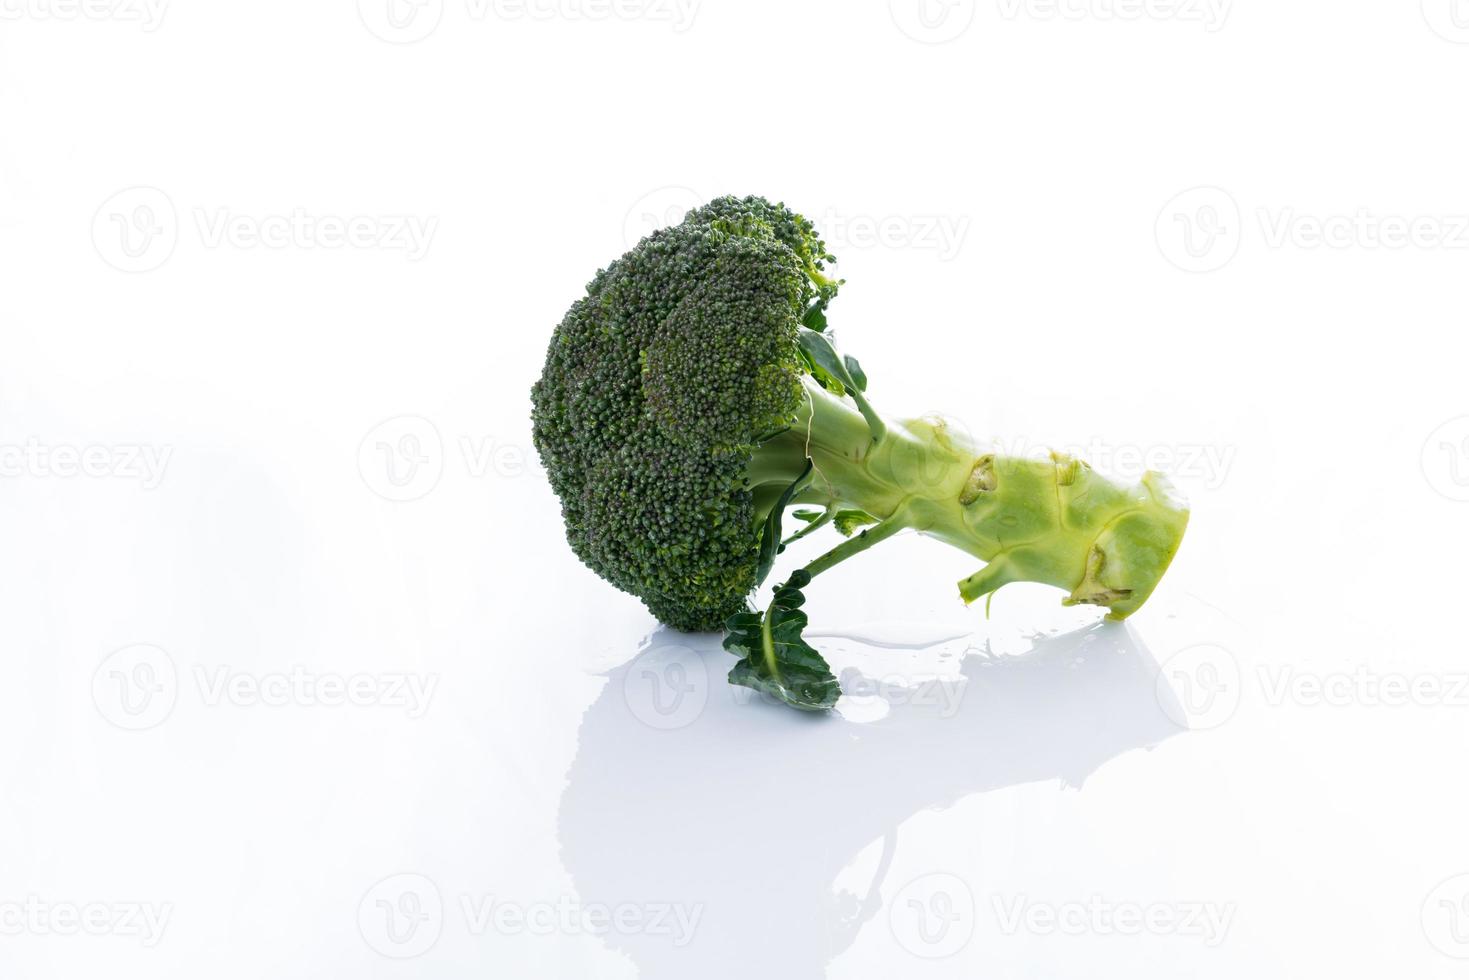 close-up broccoli op wit foto